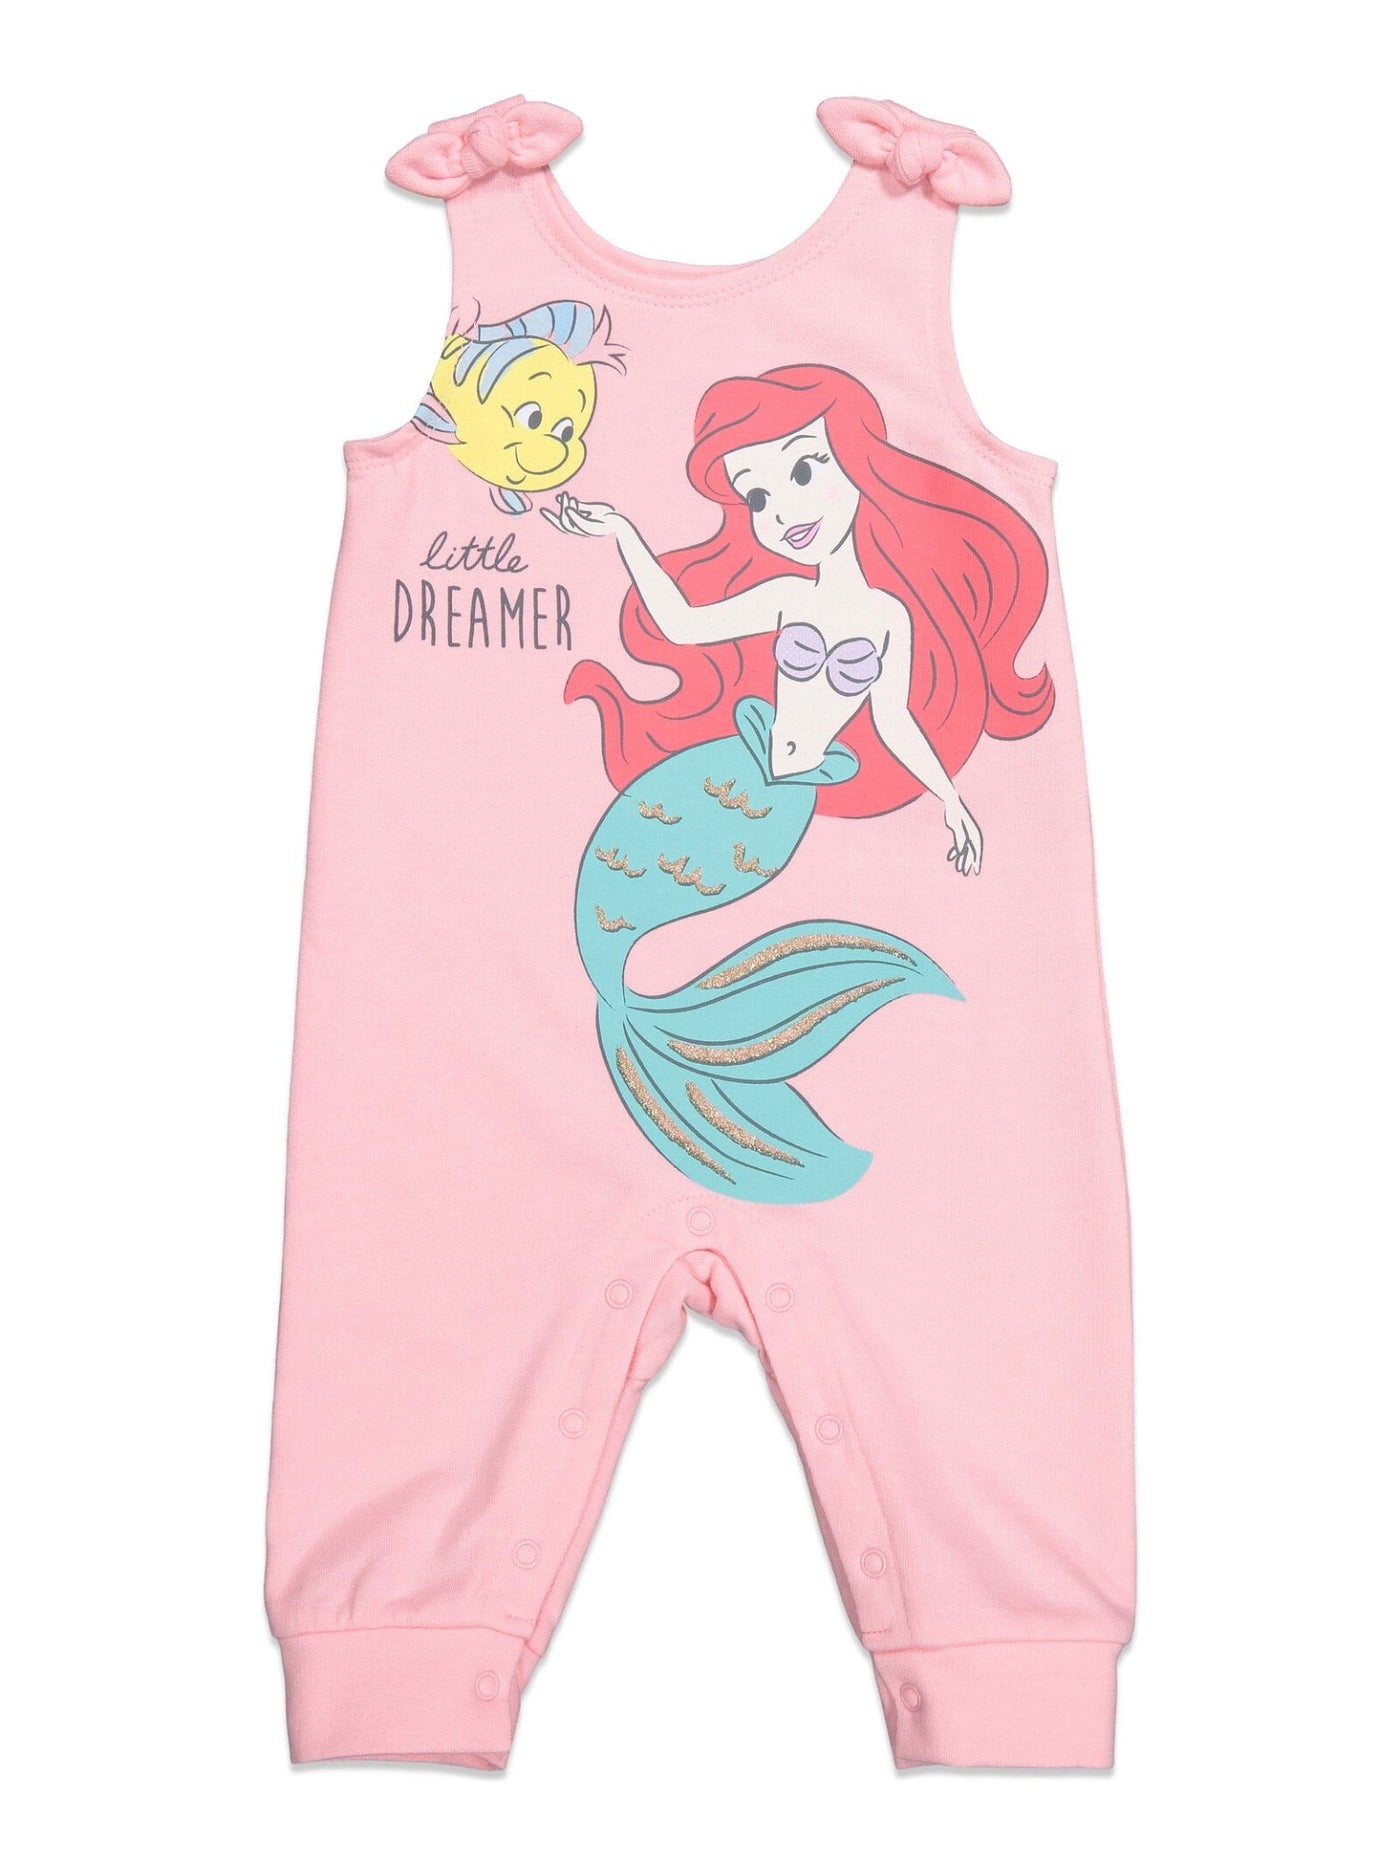 Disney Princess Princess Ariel Snap French Terry Romper T-Shirt and Headband 3 Piece Outfit Set - imagikids